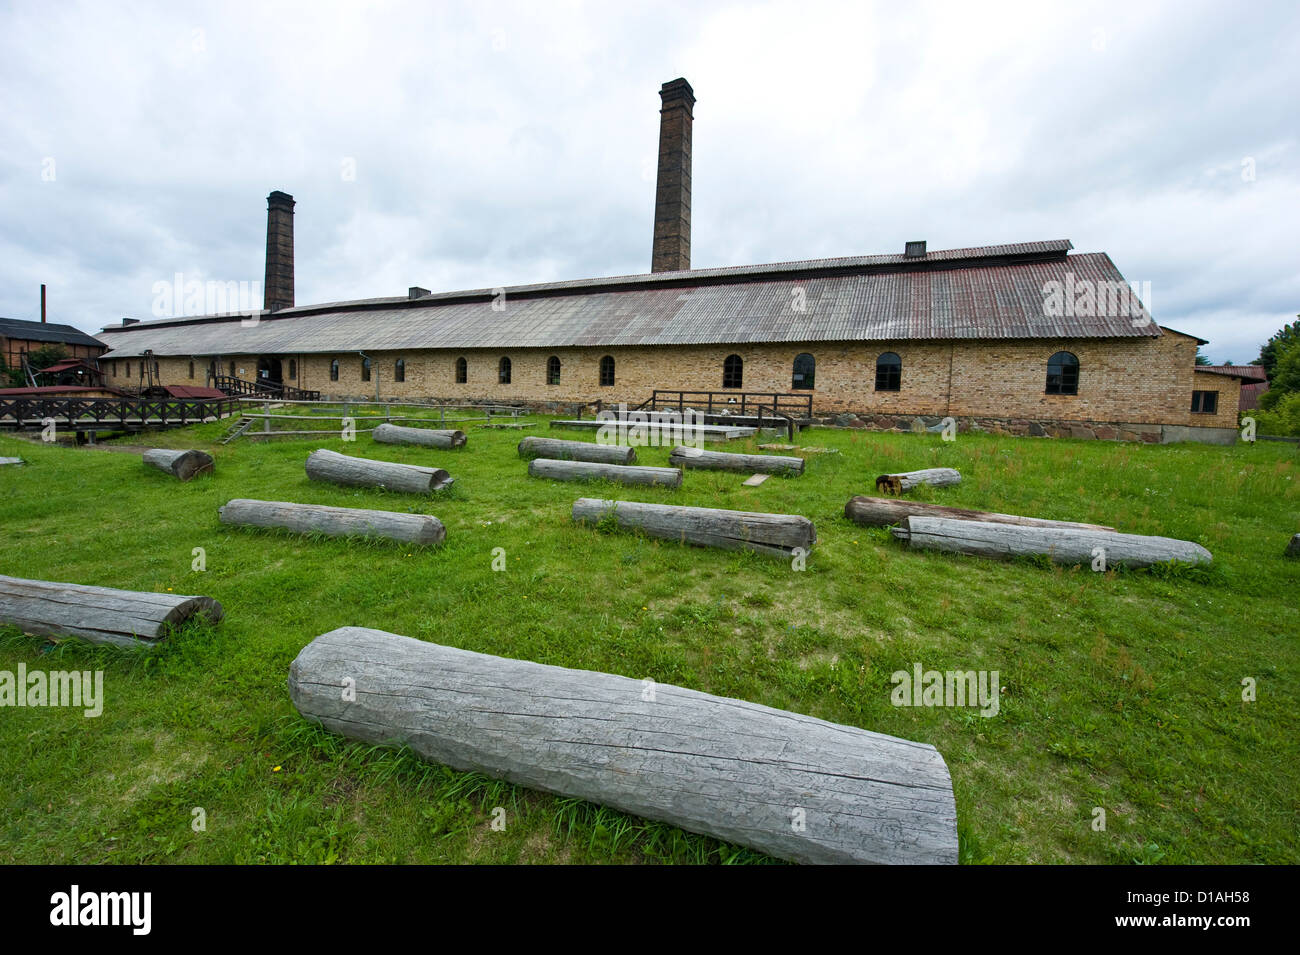 The Old Salt Works in Ciechocinek,  Kuyavian-Pomeranian Voivodeship, Poland. Stock Photo